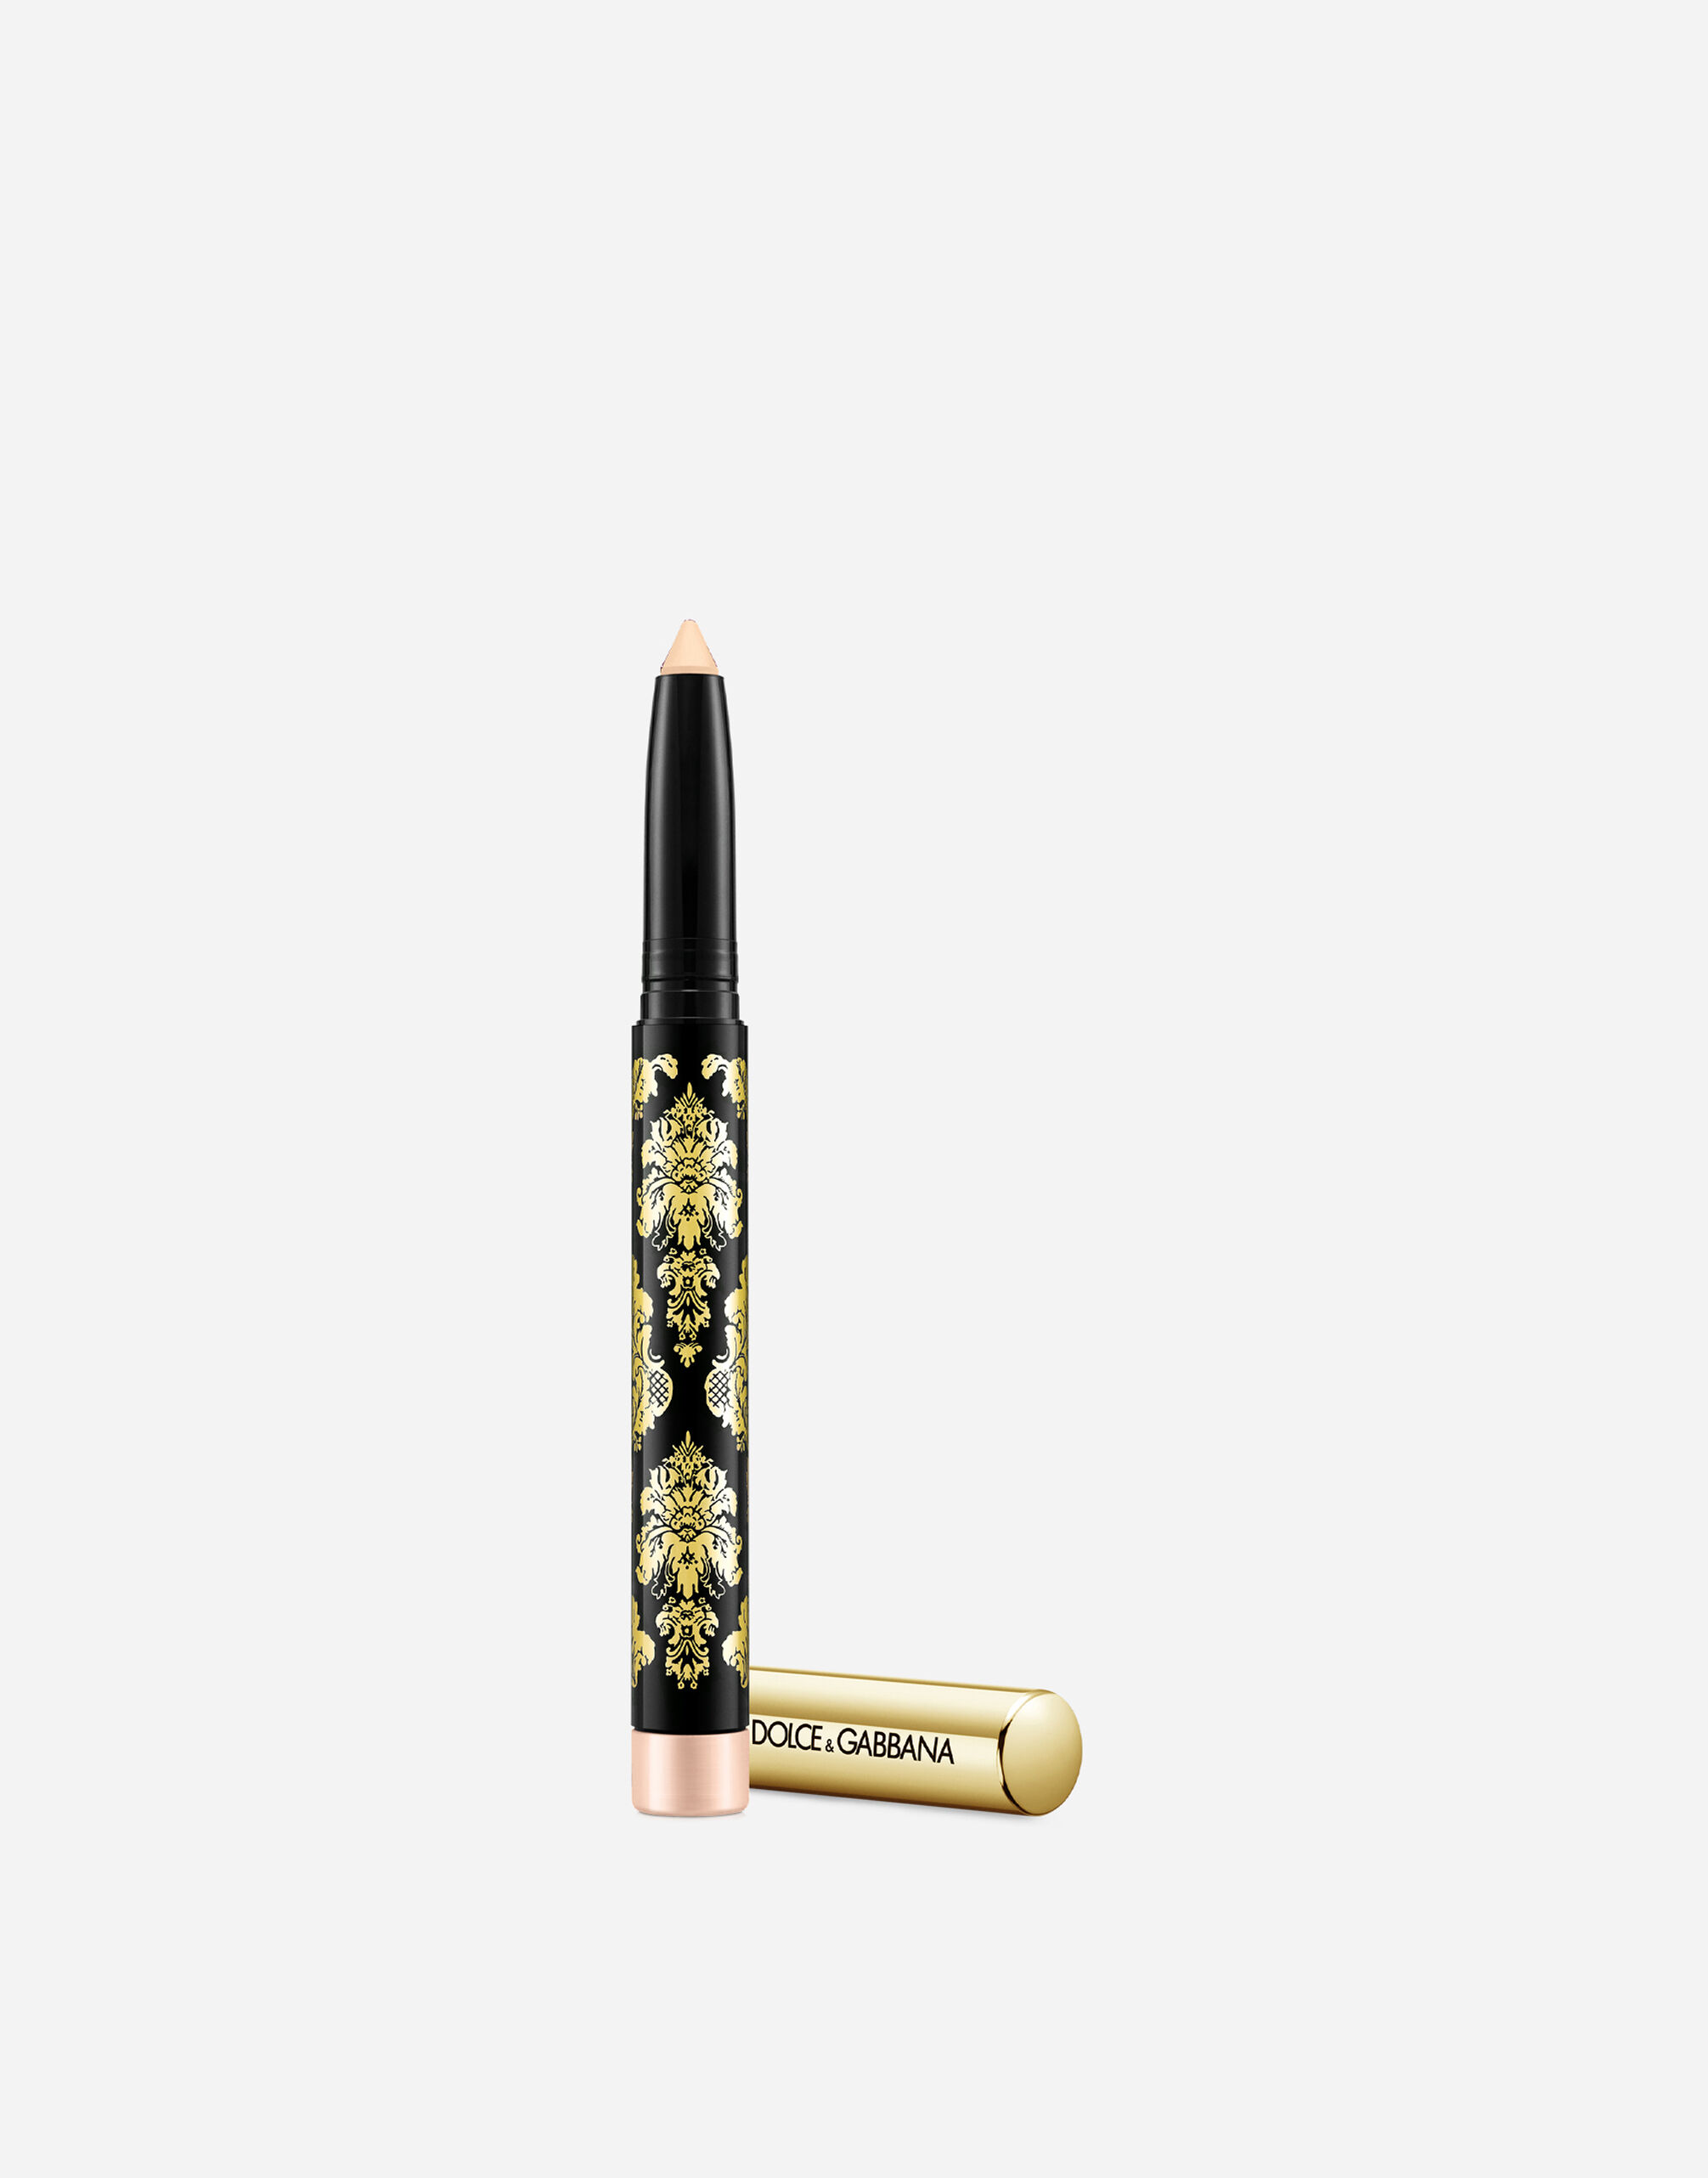 Тени-карандаш для глаз Dolce & Gabbana Intenseyes кремовые, №2 Nude, 1,4 г